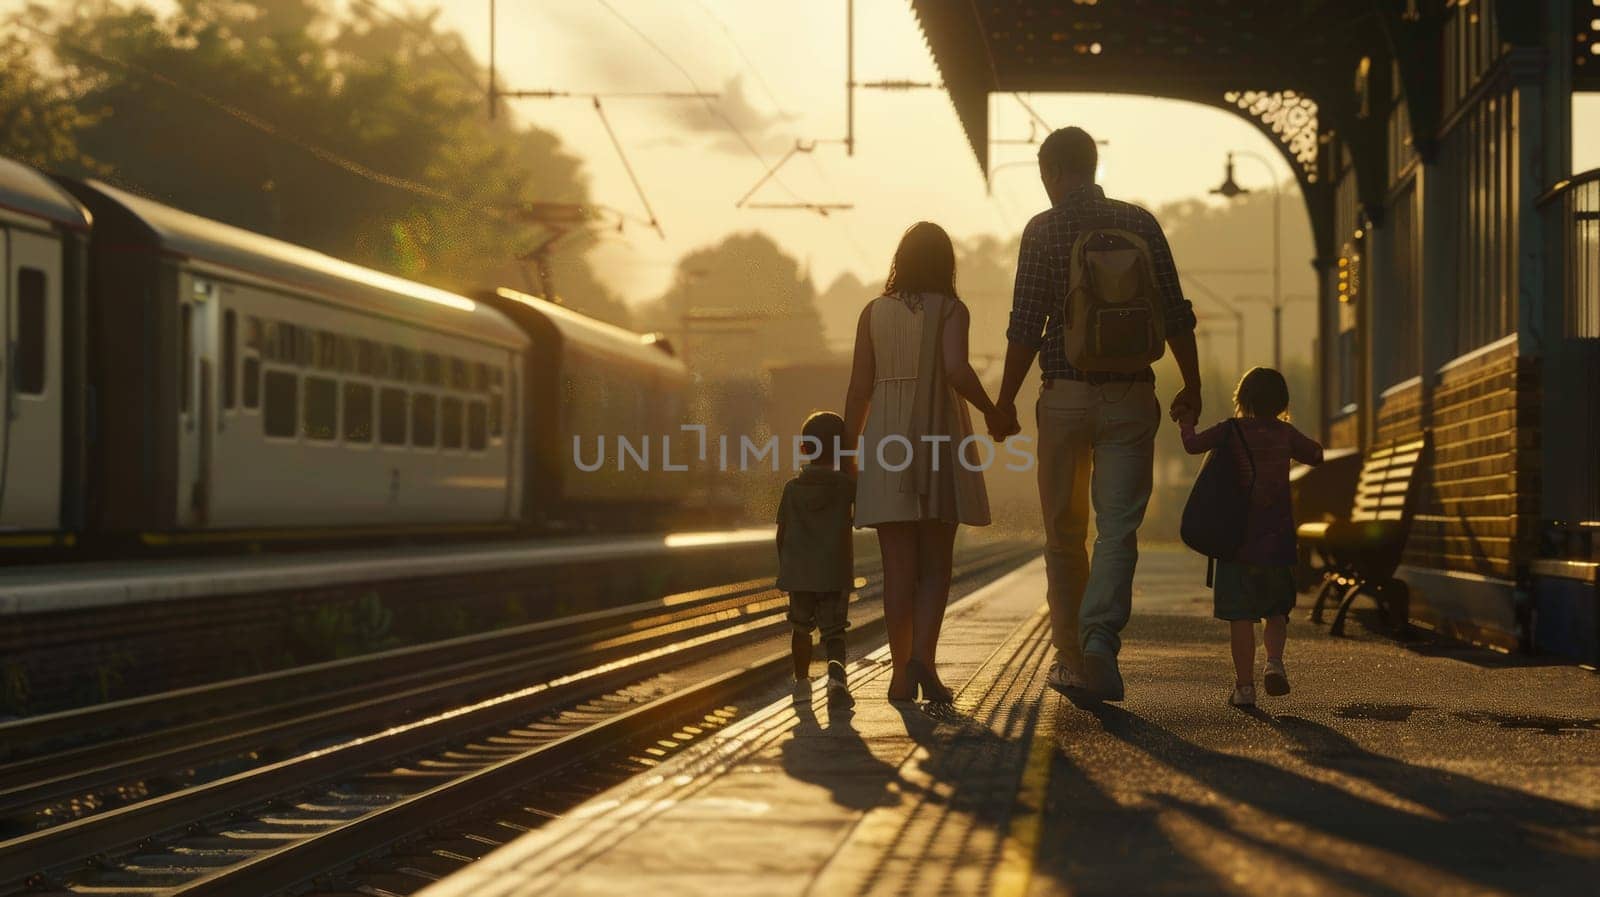 Family on platform of railway train station, Family vacation, Family travel trip by nijieimu